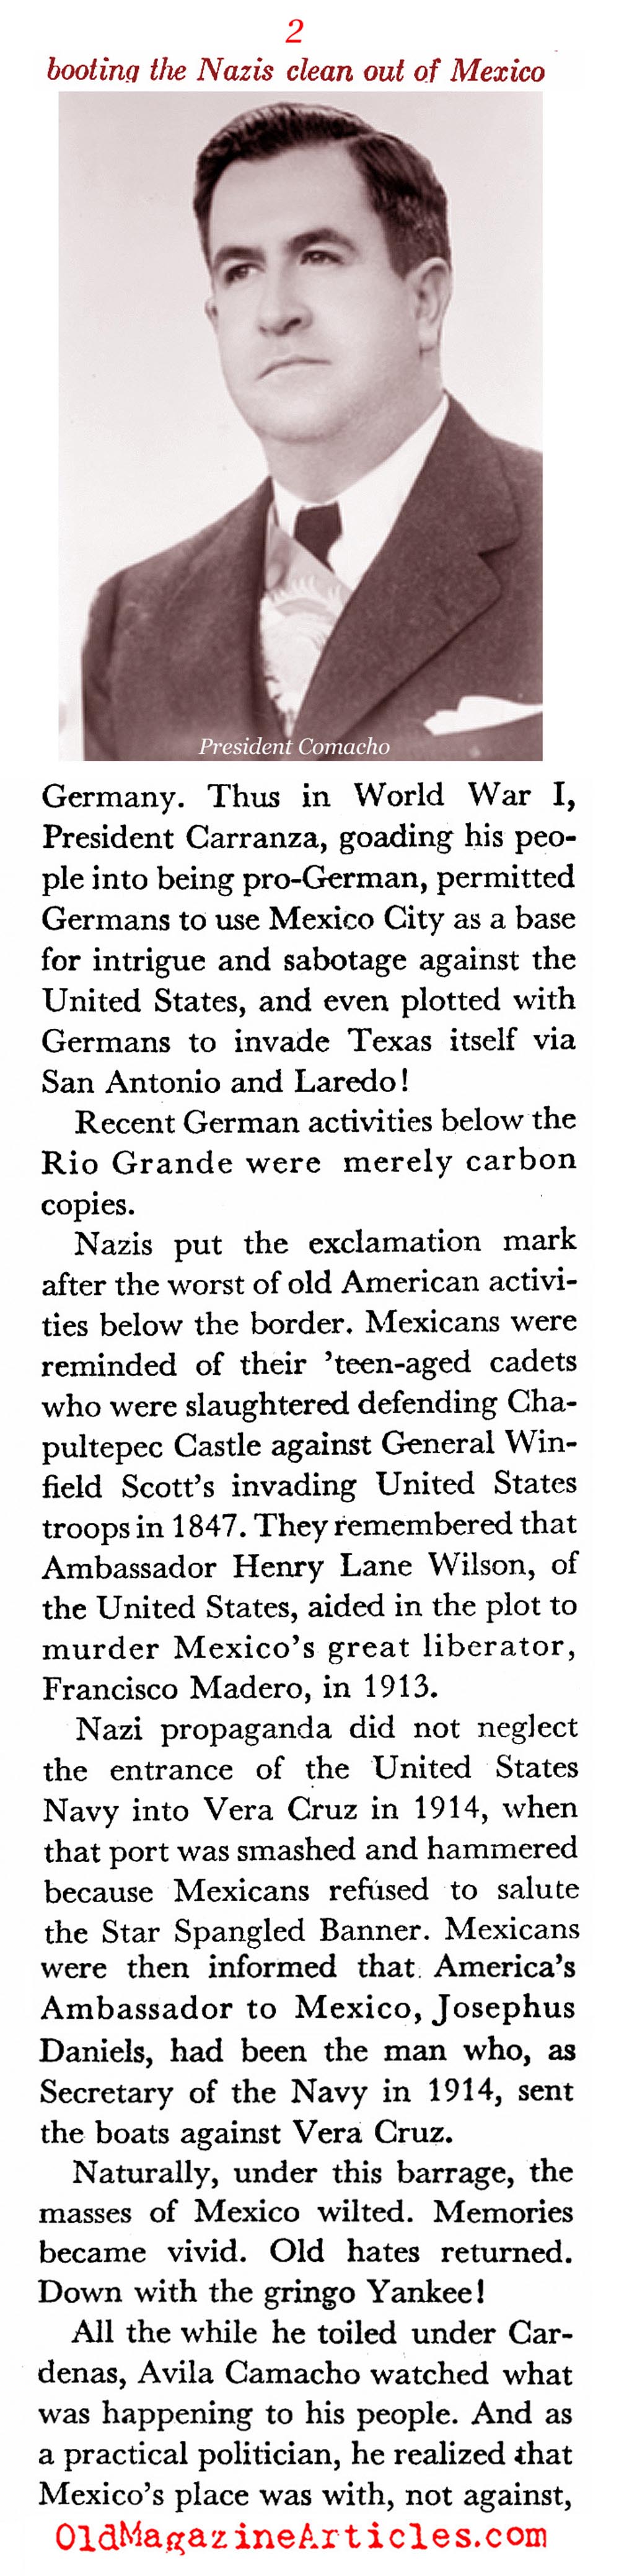 Mexico: American Ally (Coronet Magazine, 1943)